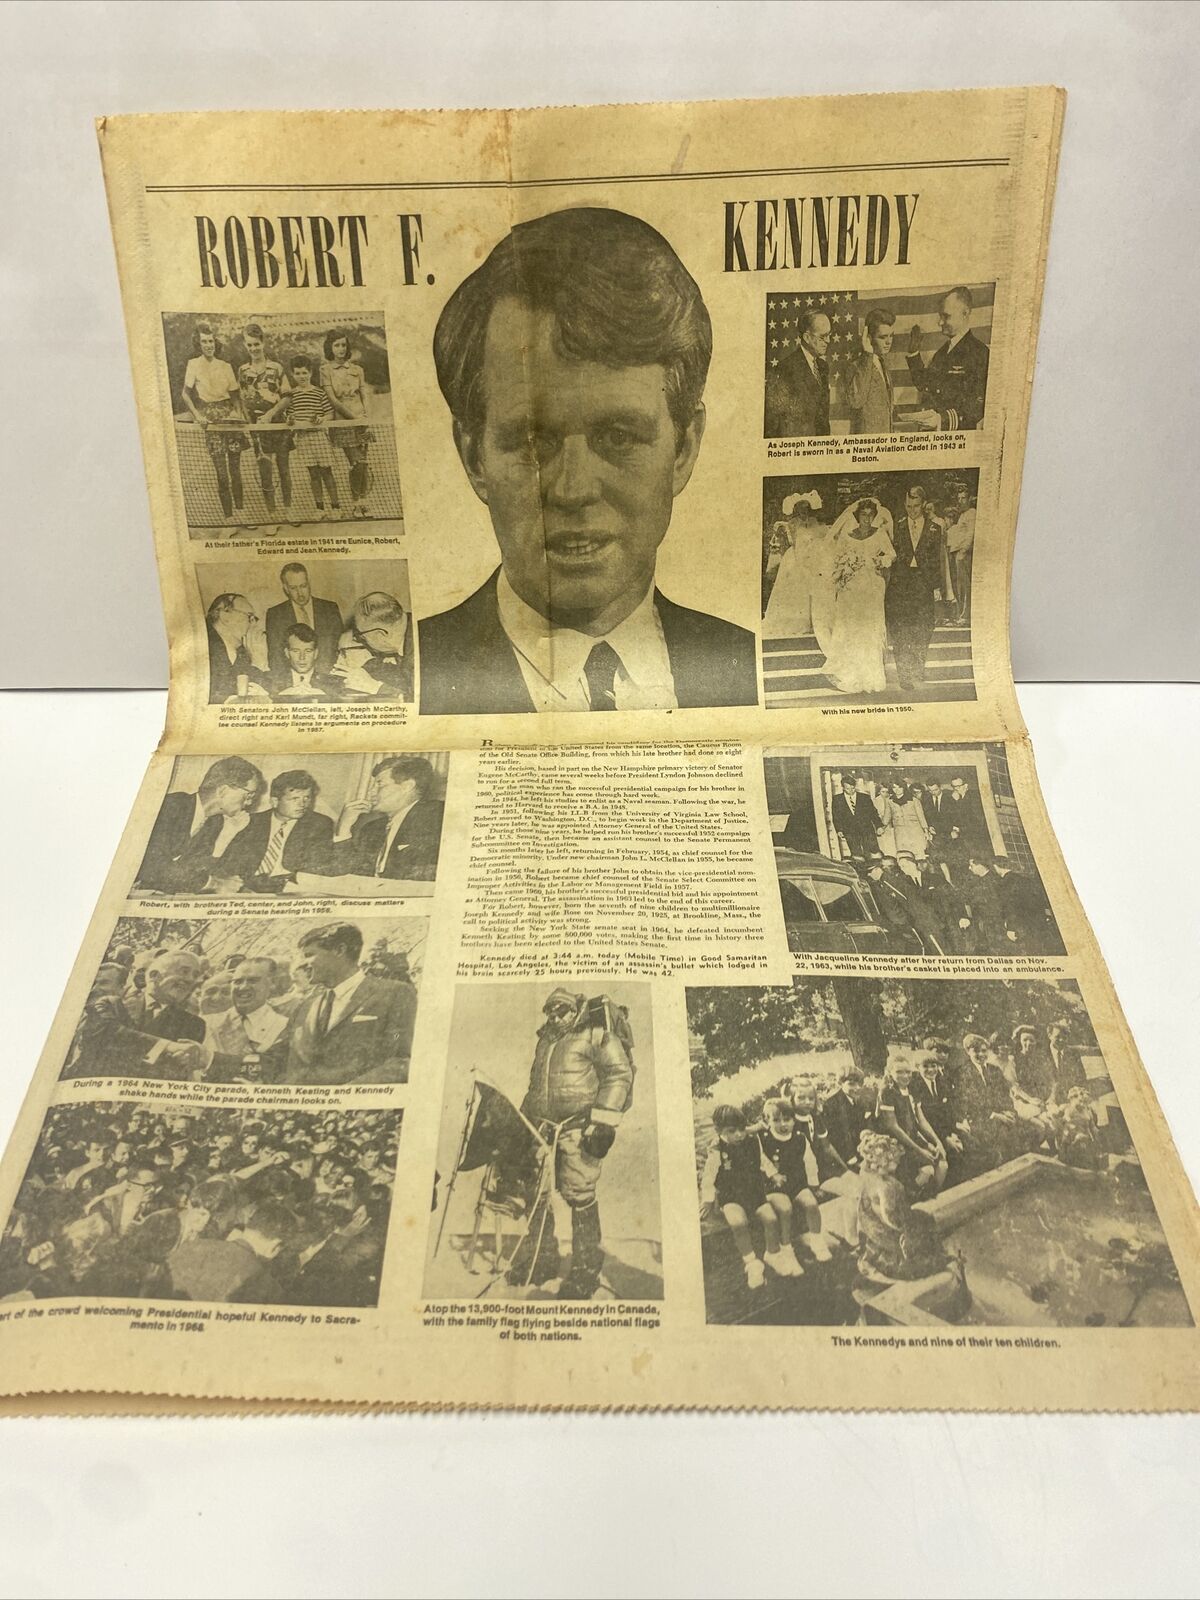 Mobile Press June 4, 1968 Robert F. Kennedy Newspaper